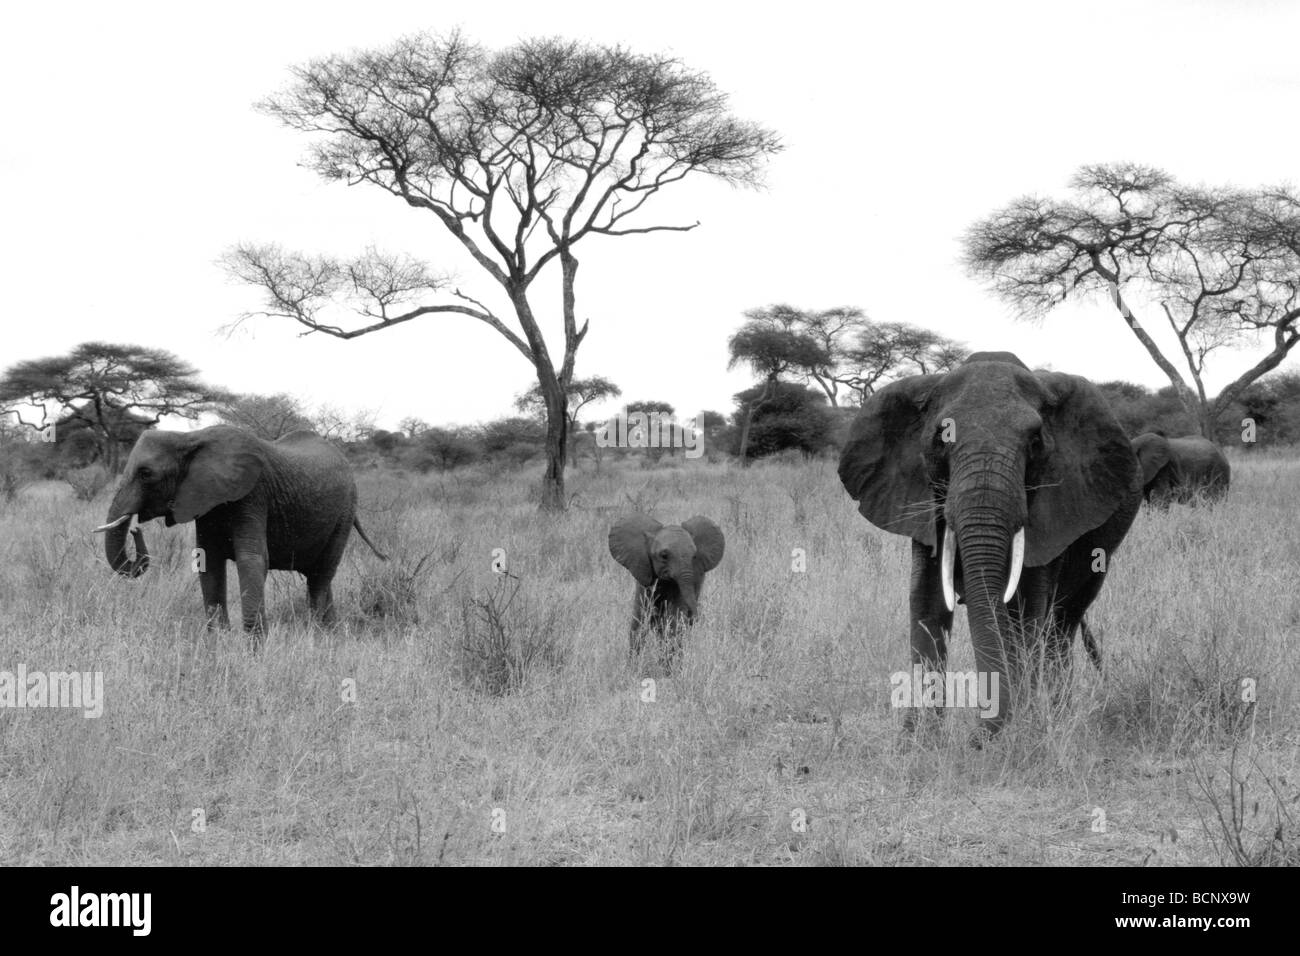 tanzania serengeti national park Stock Photo